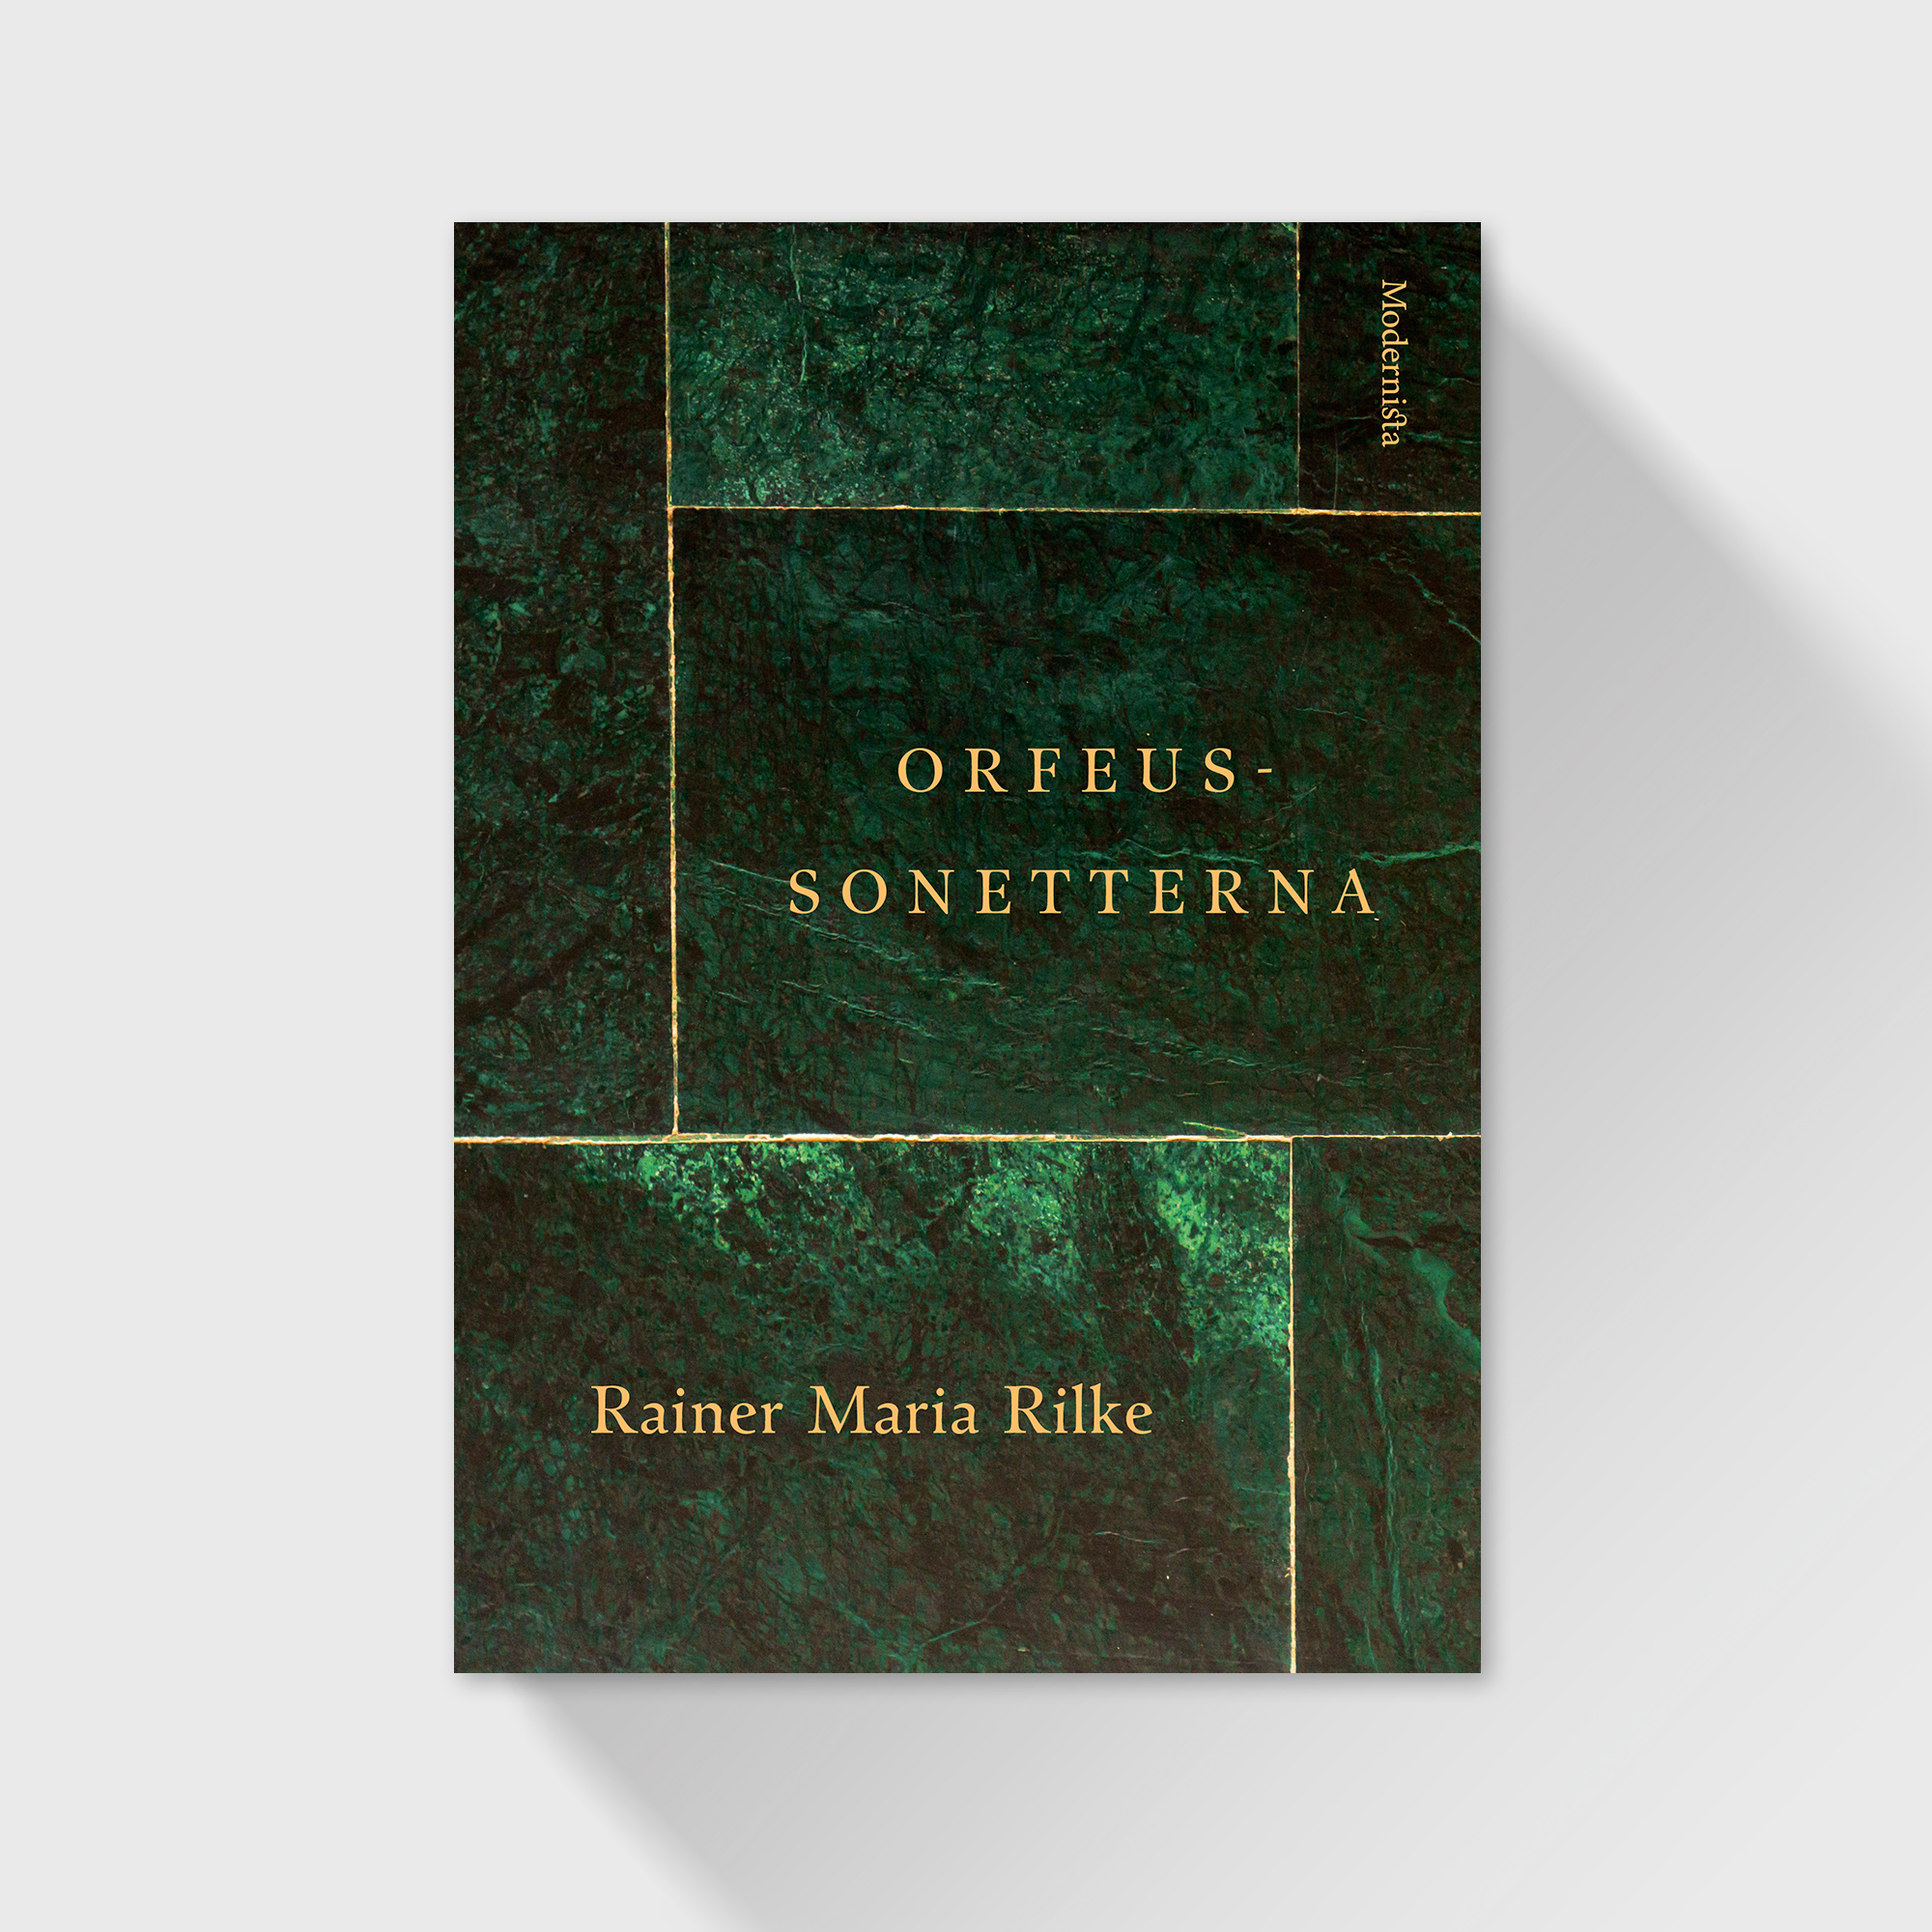 Orfeus-sonetterna – Rainer Maria Rilke